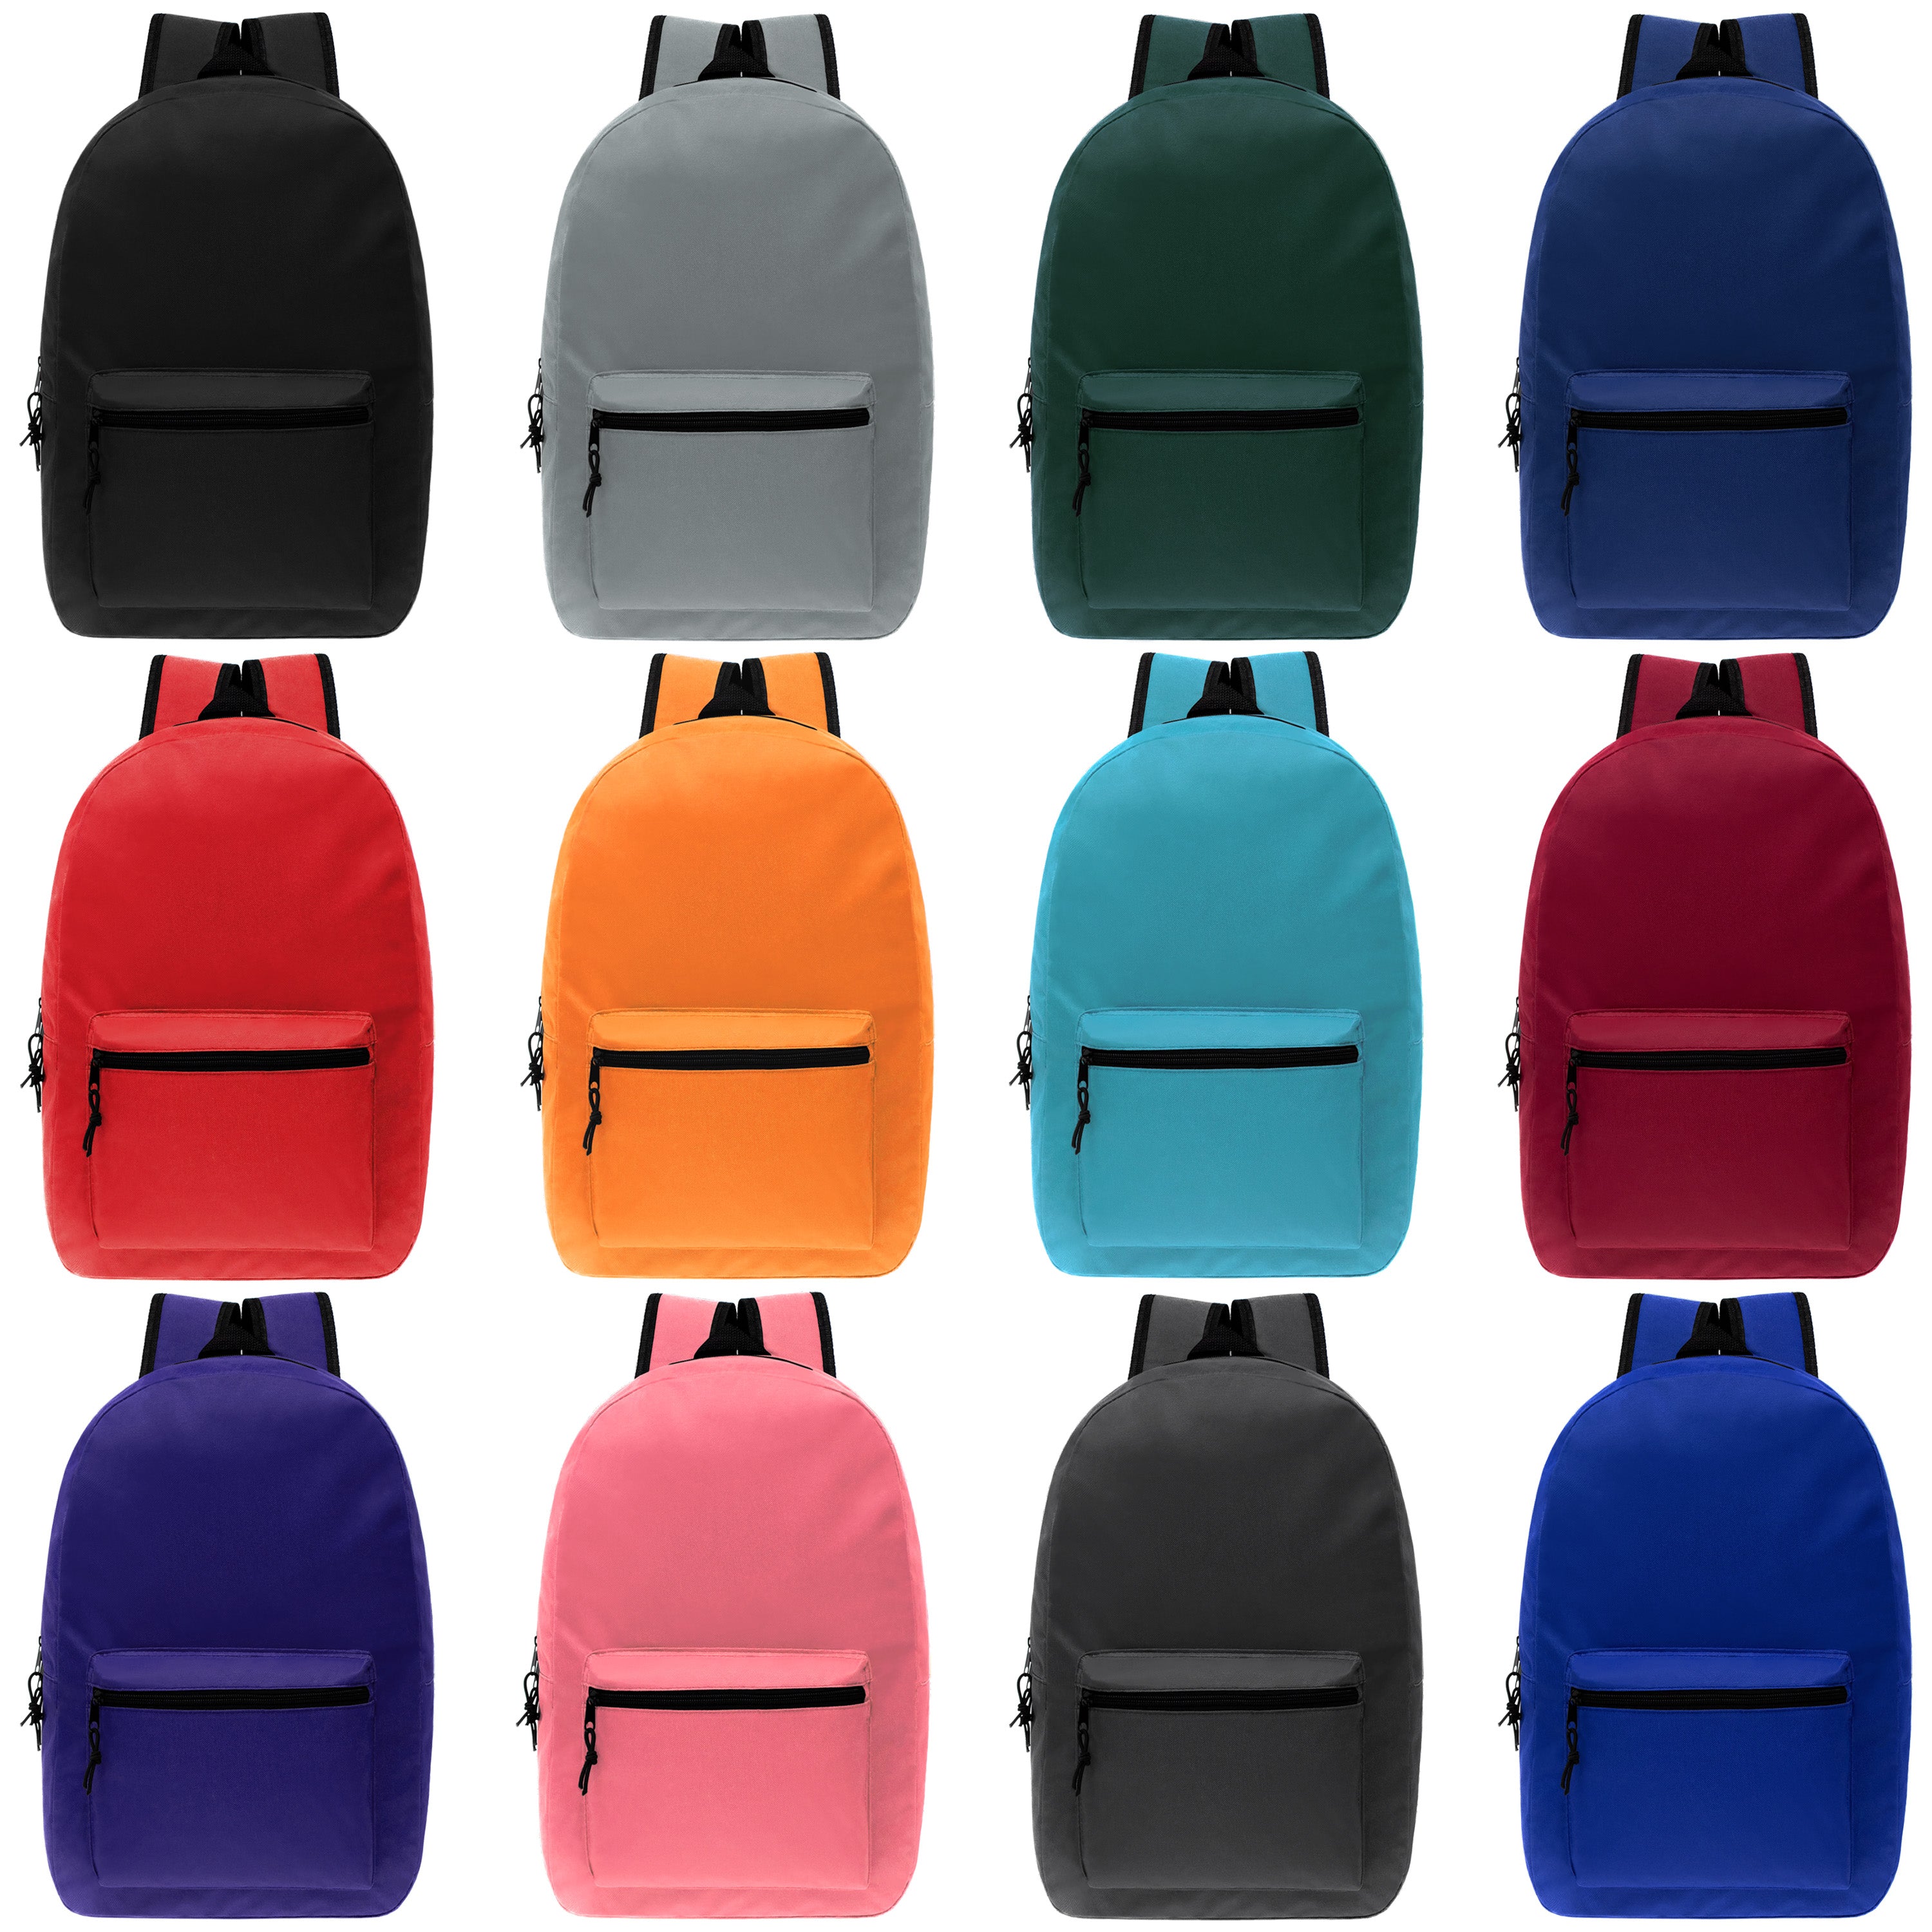 12 Pack Assorted Colors + School Backpacks Wholesale School Supplies Kit Case Of 12